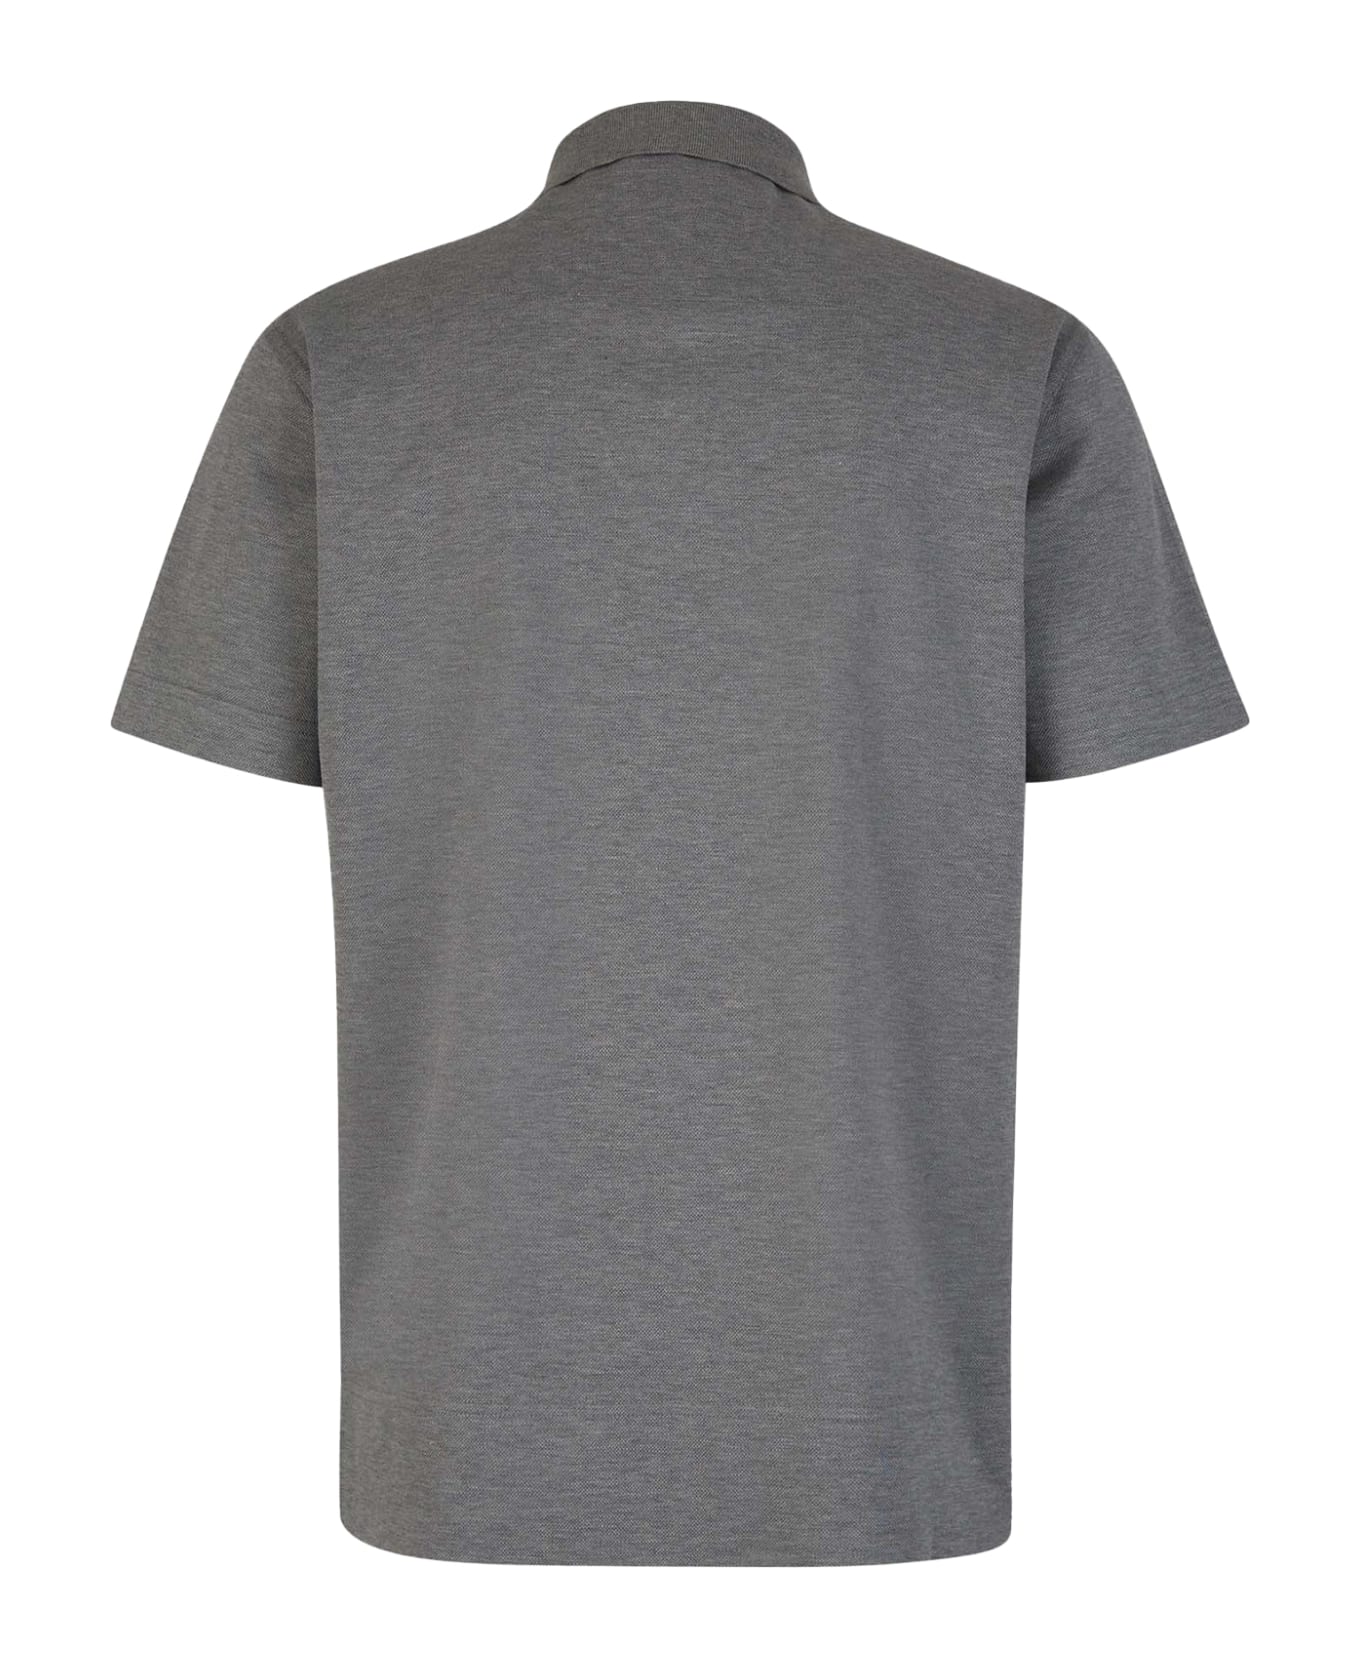 Givenchy Cotton Polo Shirt - LIGHT GREY MELANGE